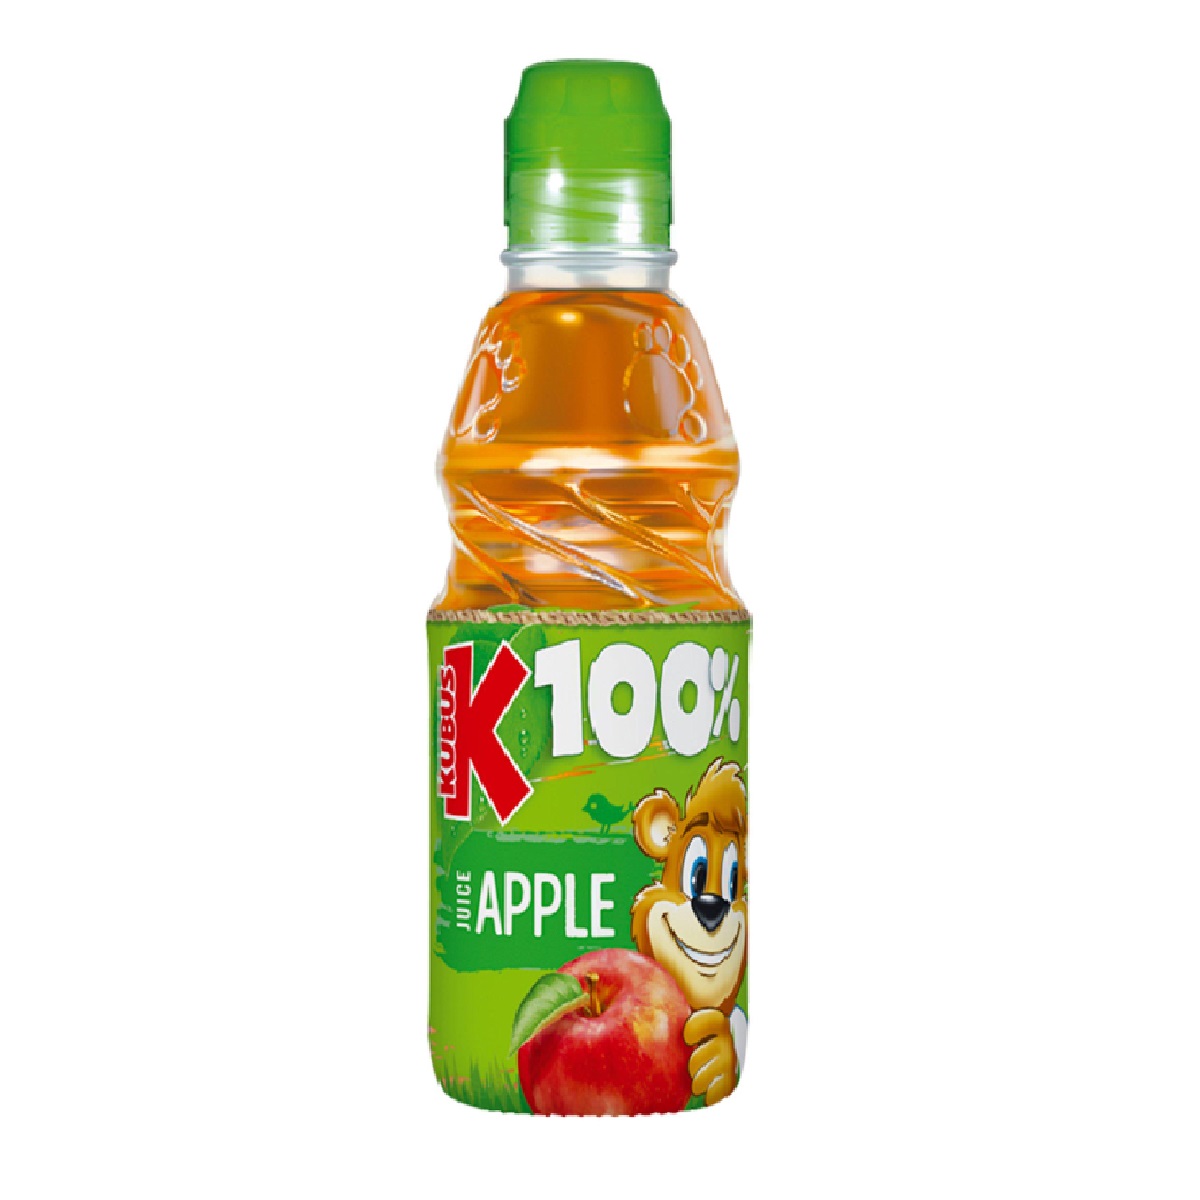 Kubus 100% Apple Juice 300ml